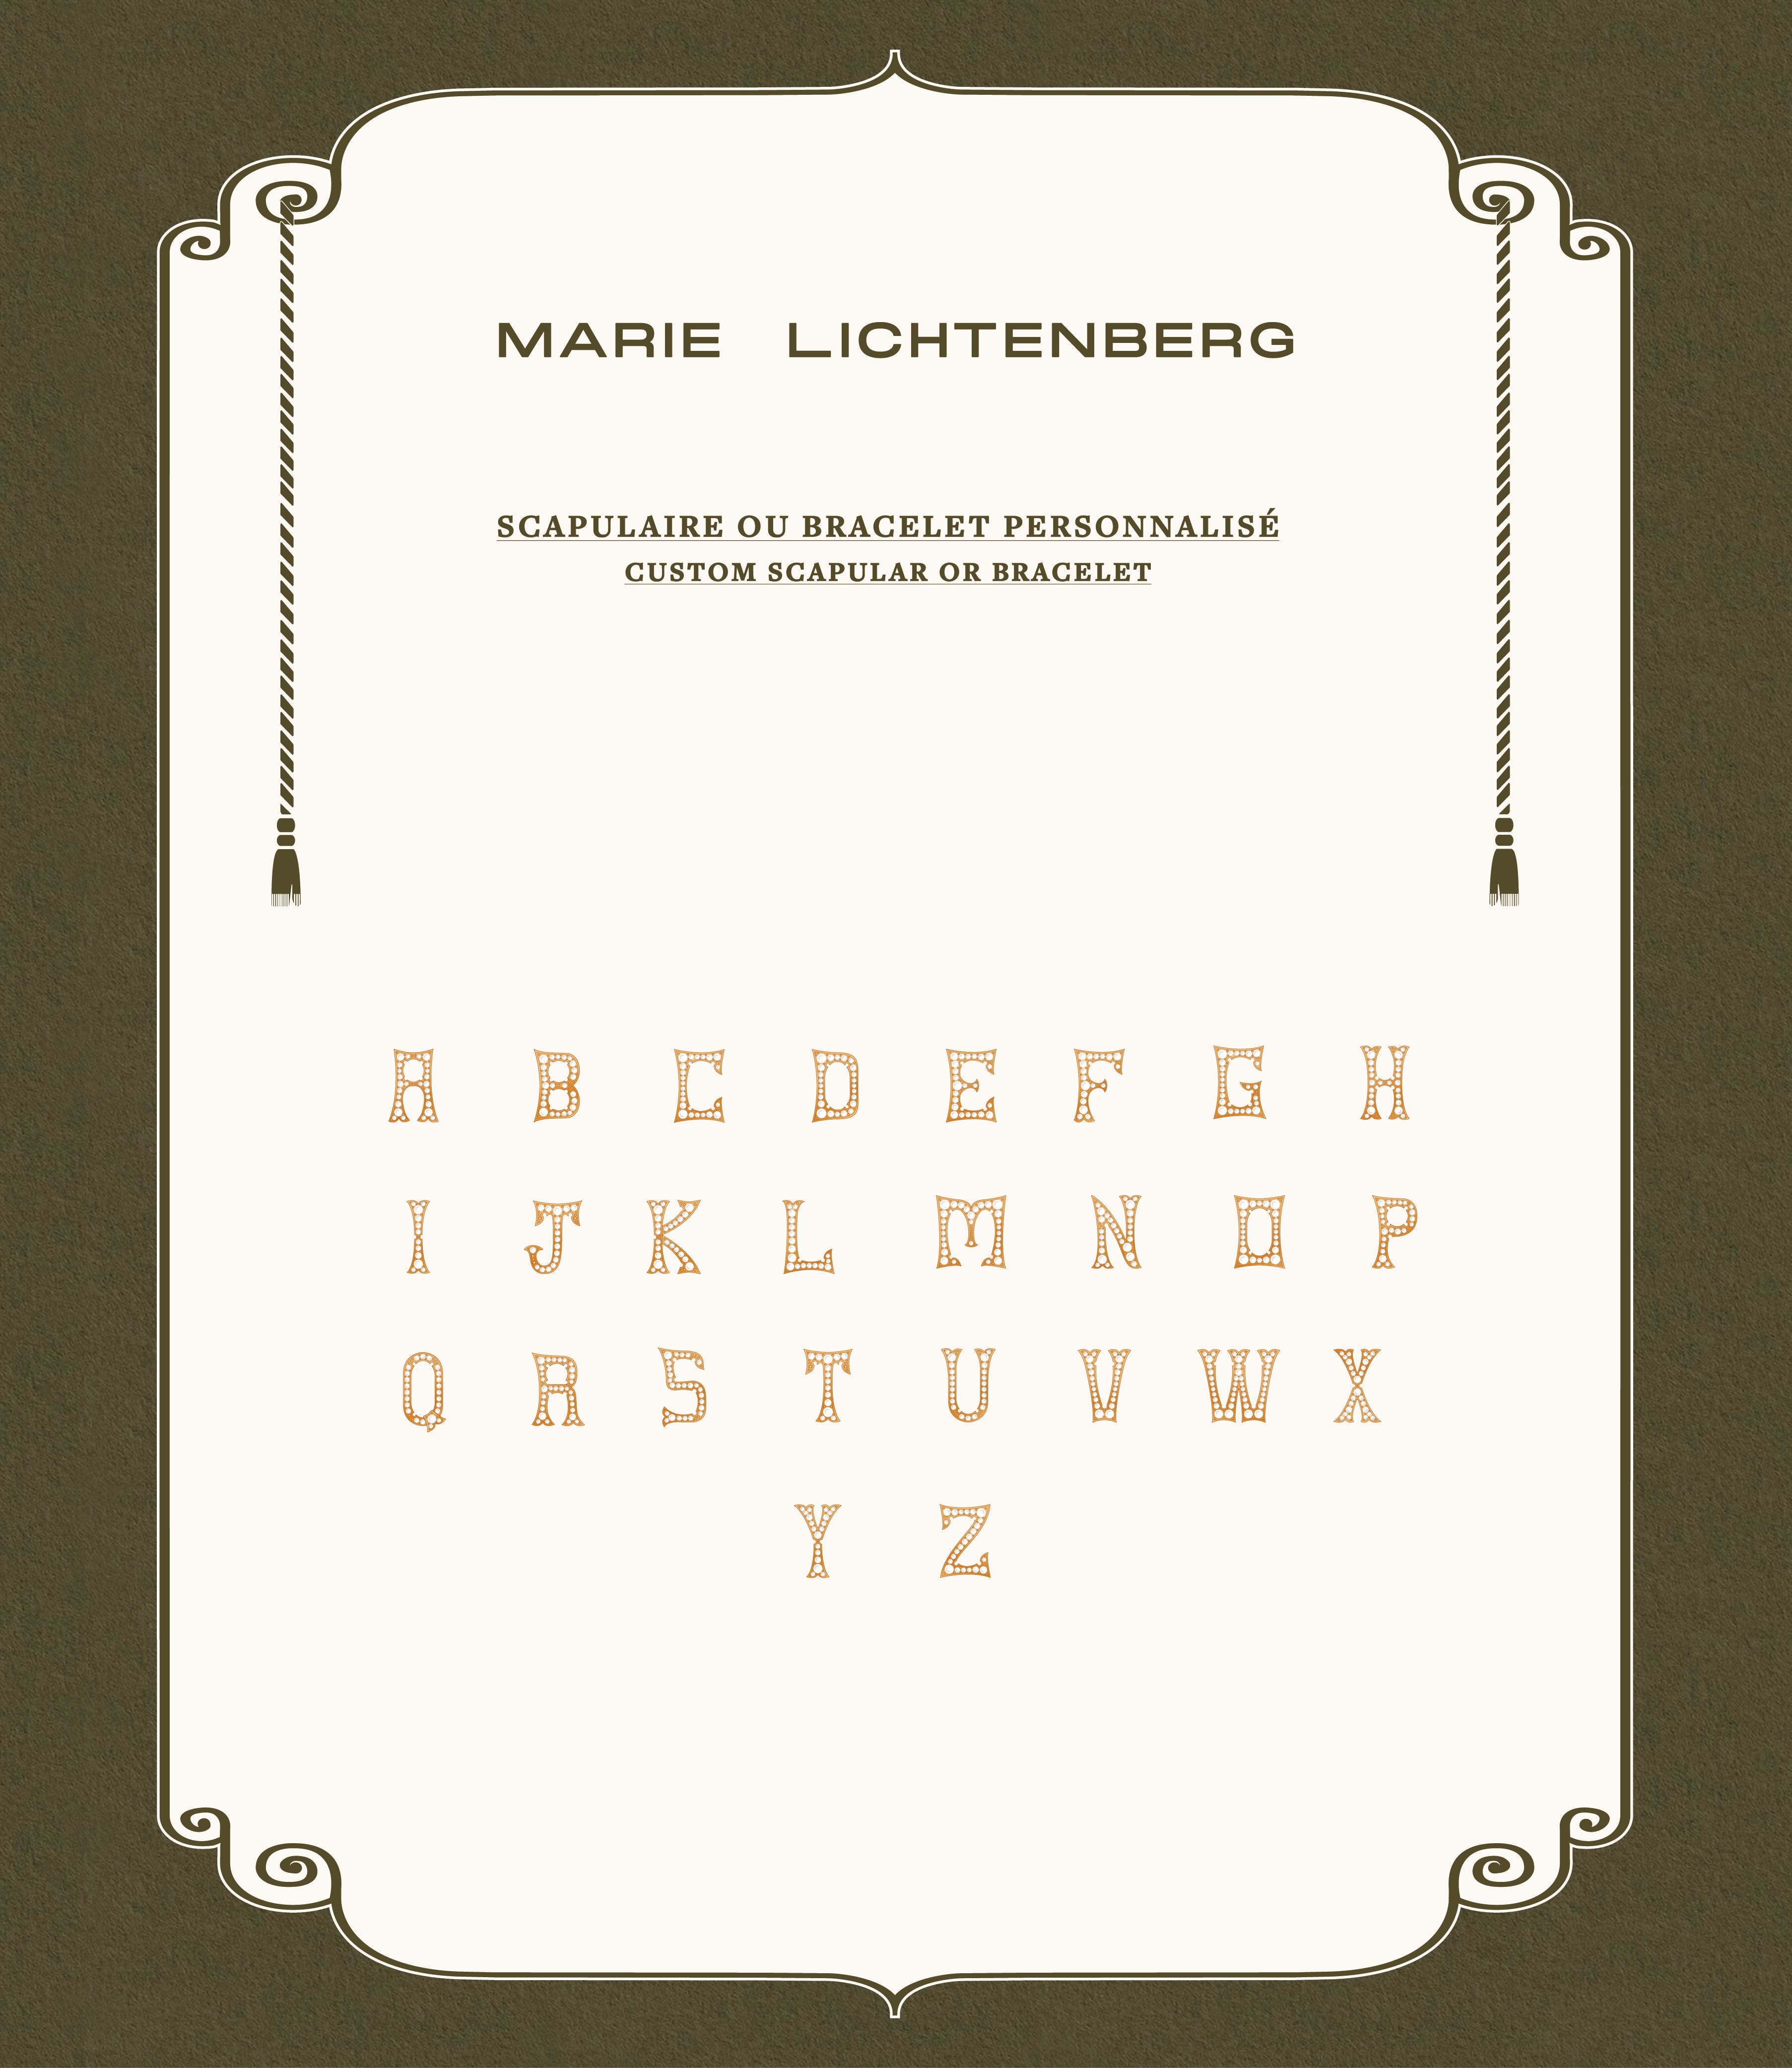 Custom Scapular Large - Marie Lichtenberg